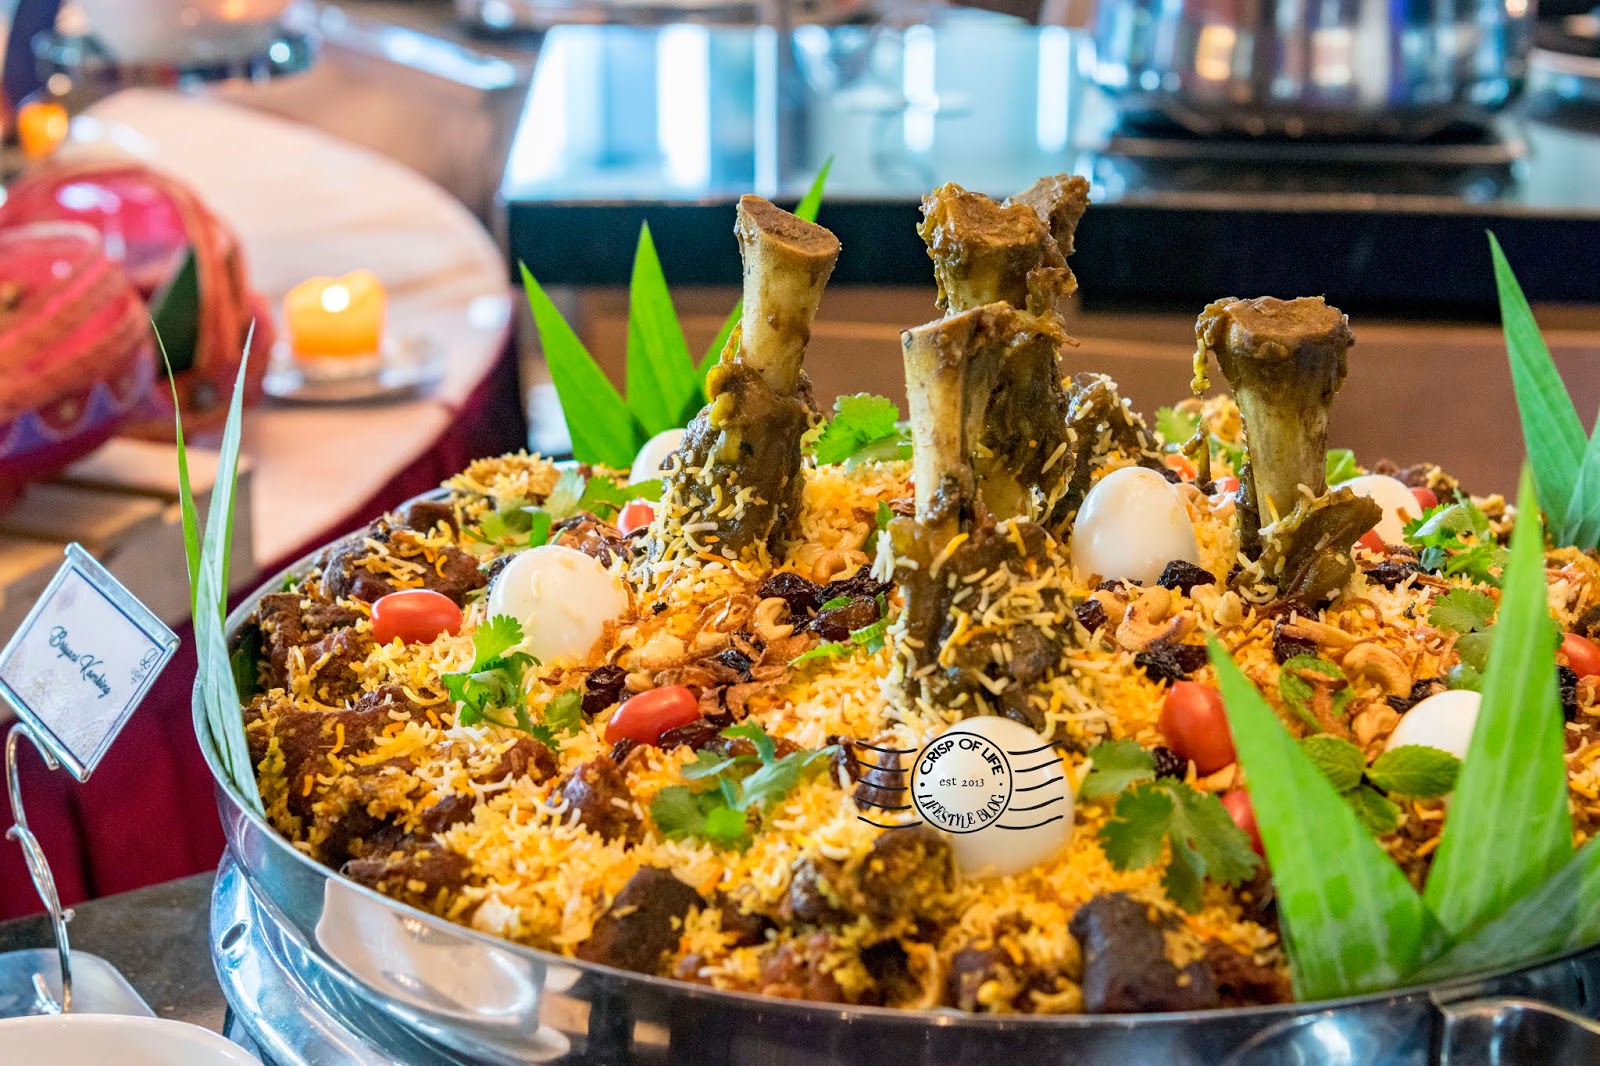 "Khazanah Sajian Nusantara" Ramadan Buffet Dinner with Minang Dishes @ The Light Hotel, Penang